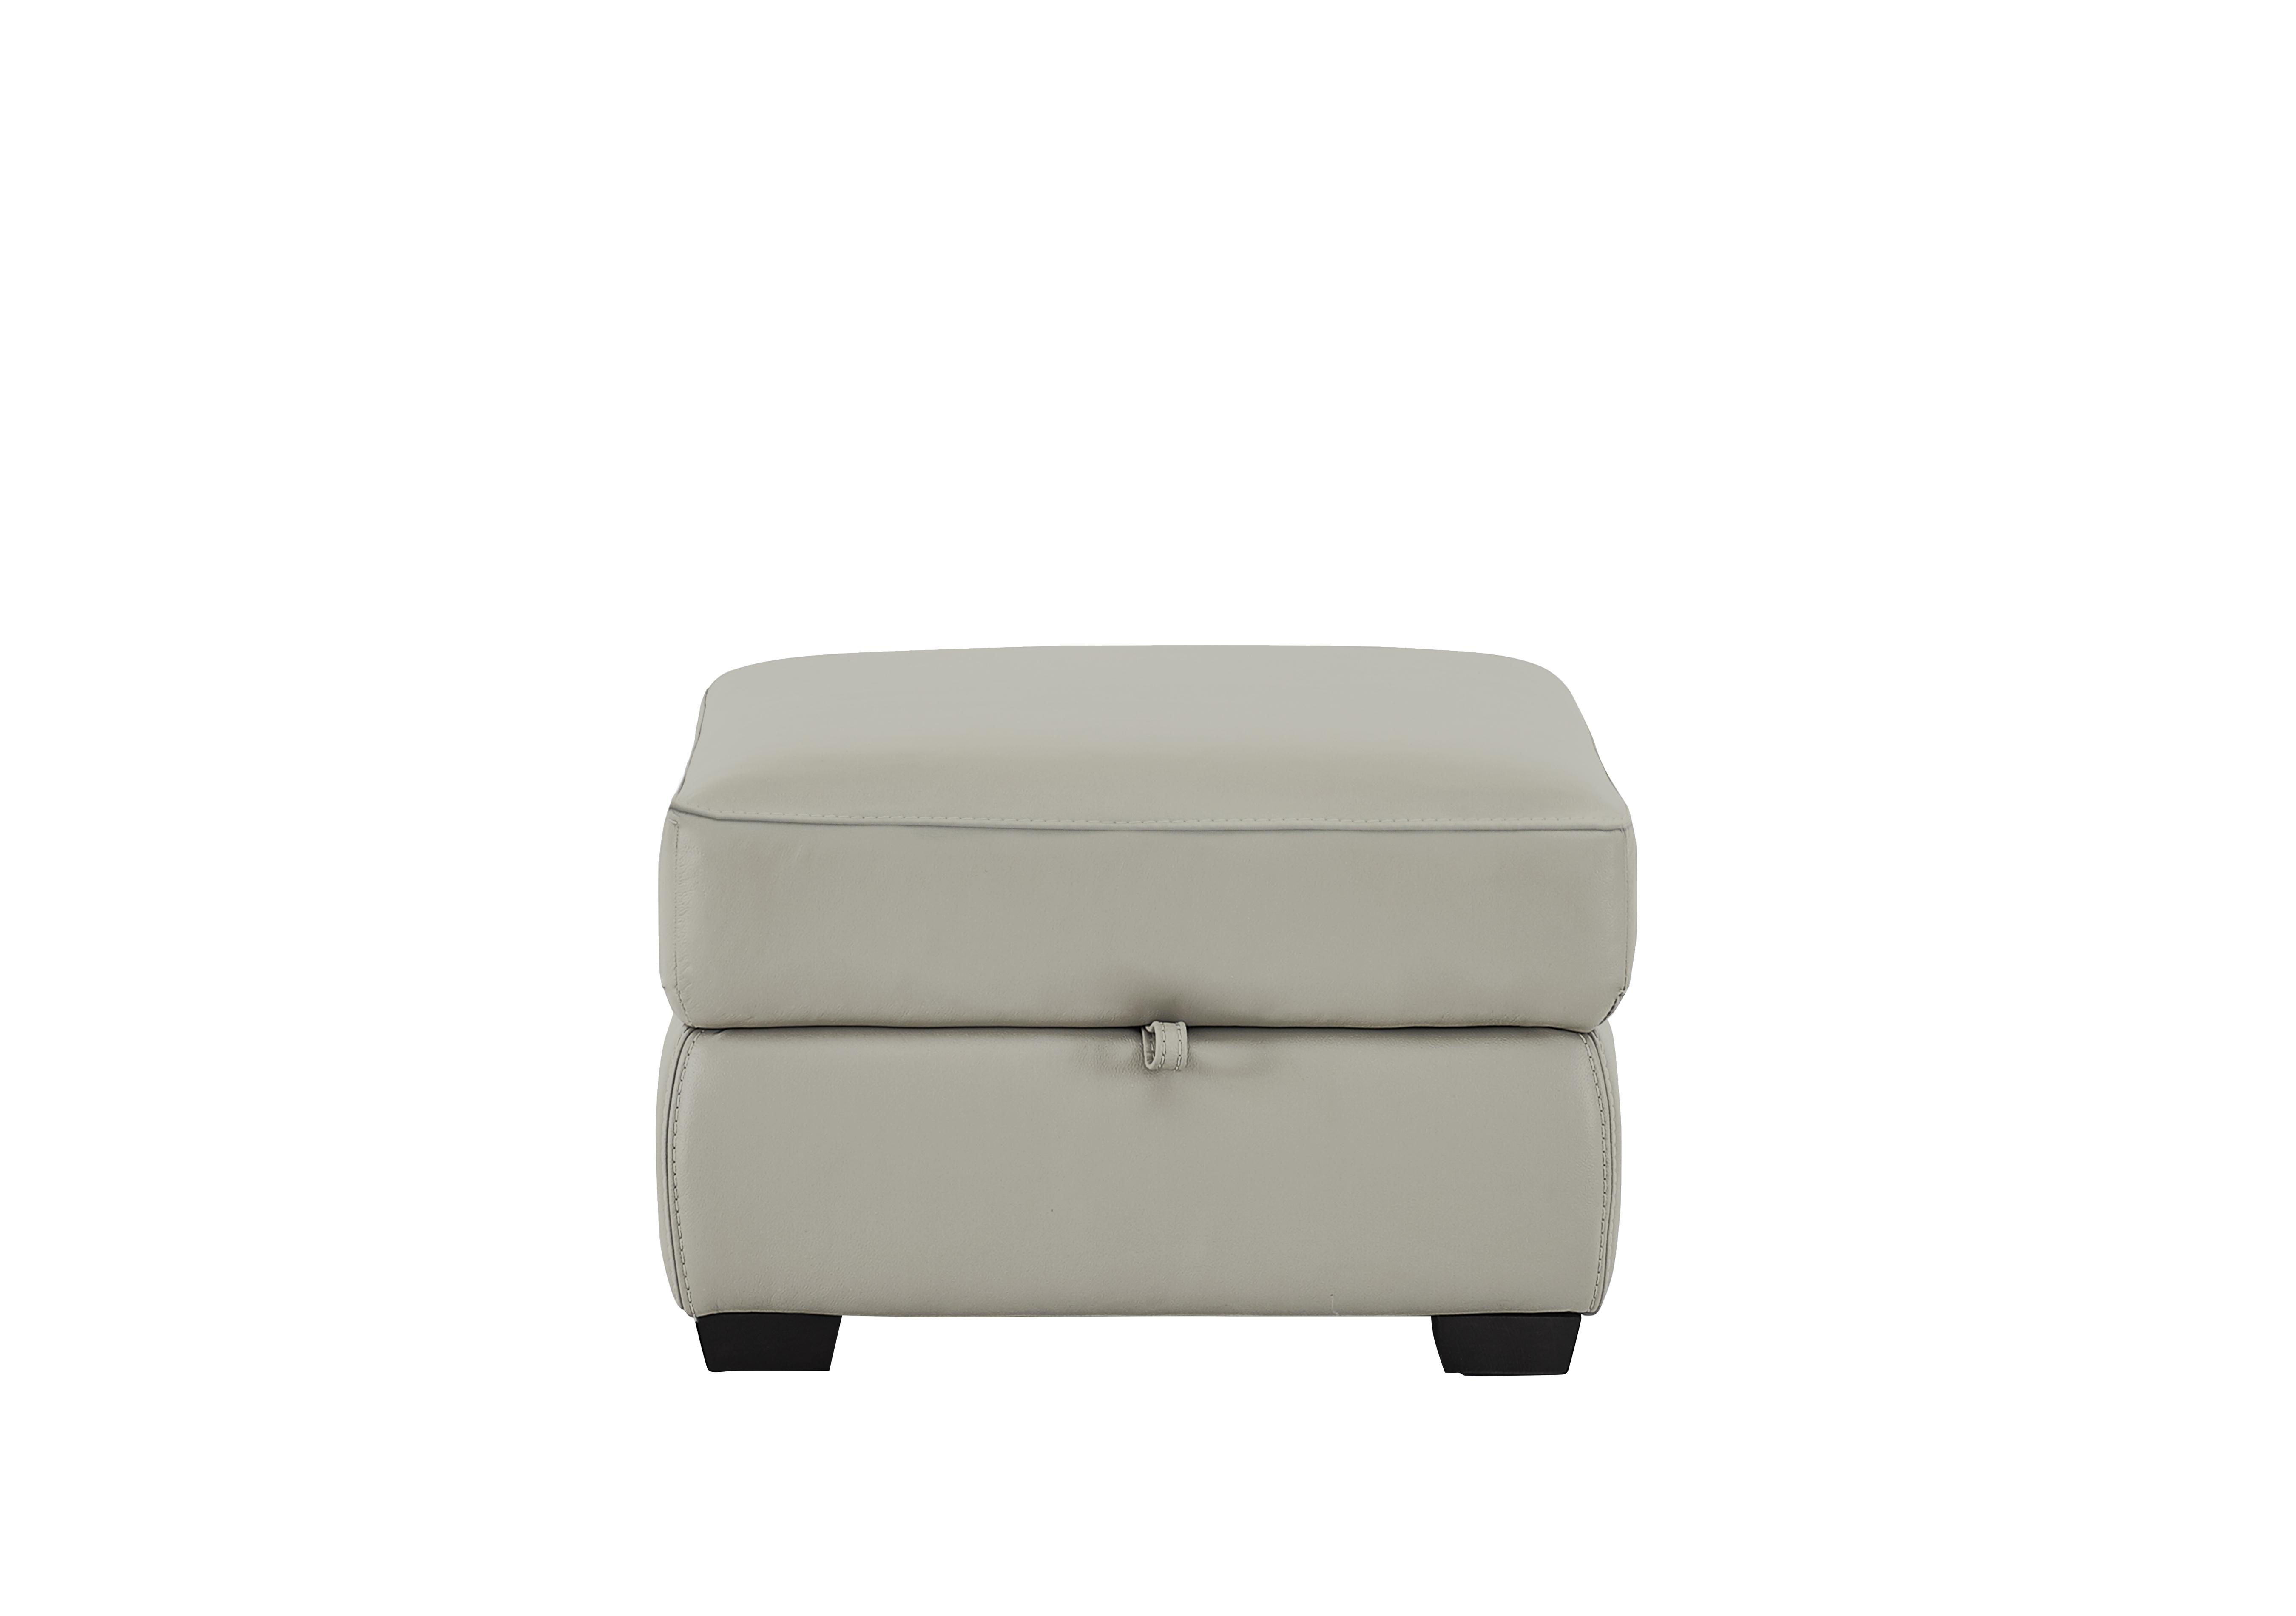 Starlight Express Leather Storage Footstool in Bv-041e Dapple Grey on Furniture Village